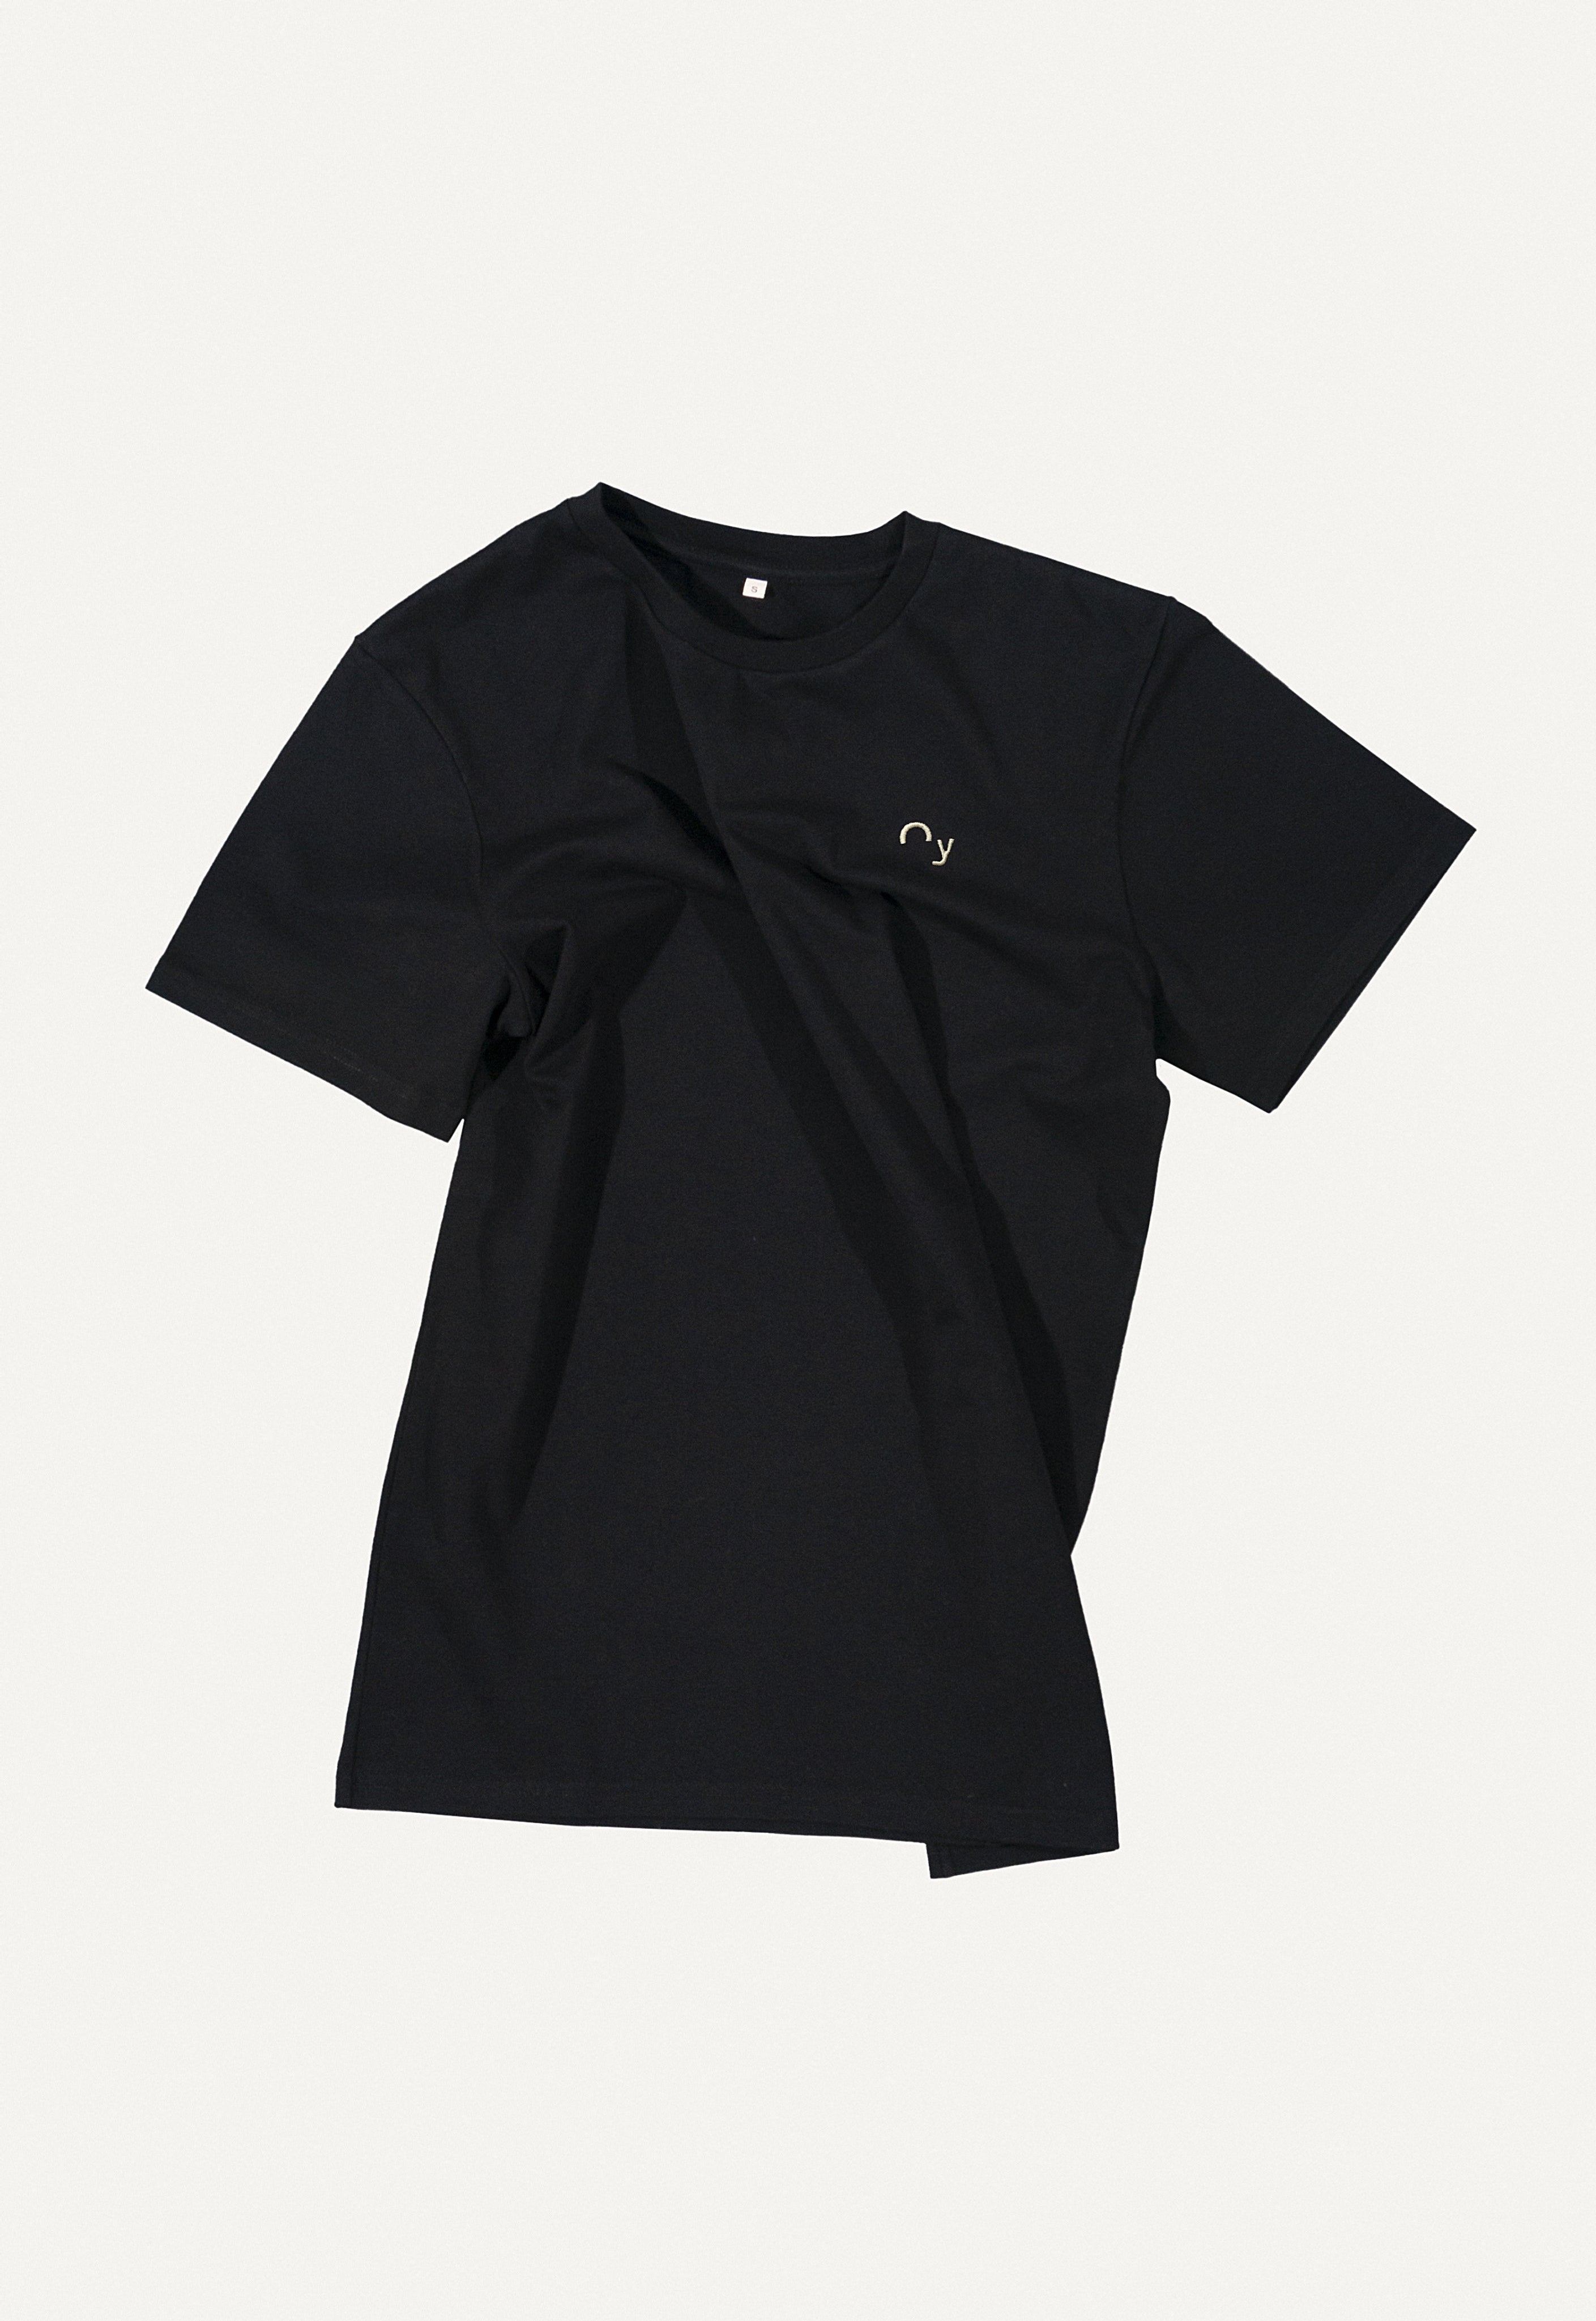 Oy_AC_T-Shirt-2024-Black_1.jpg